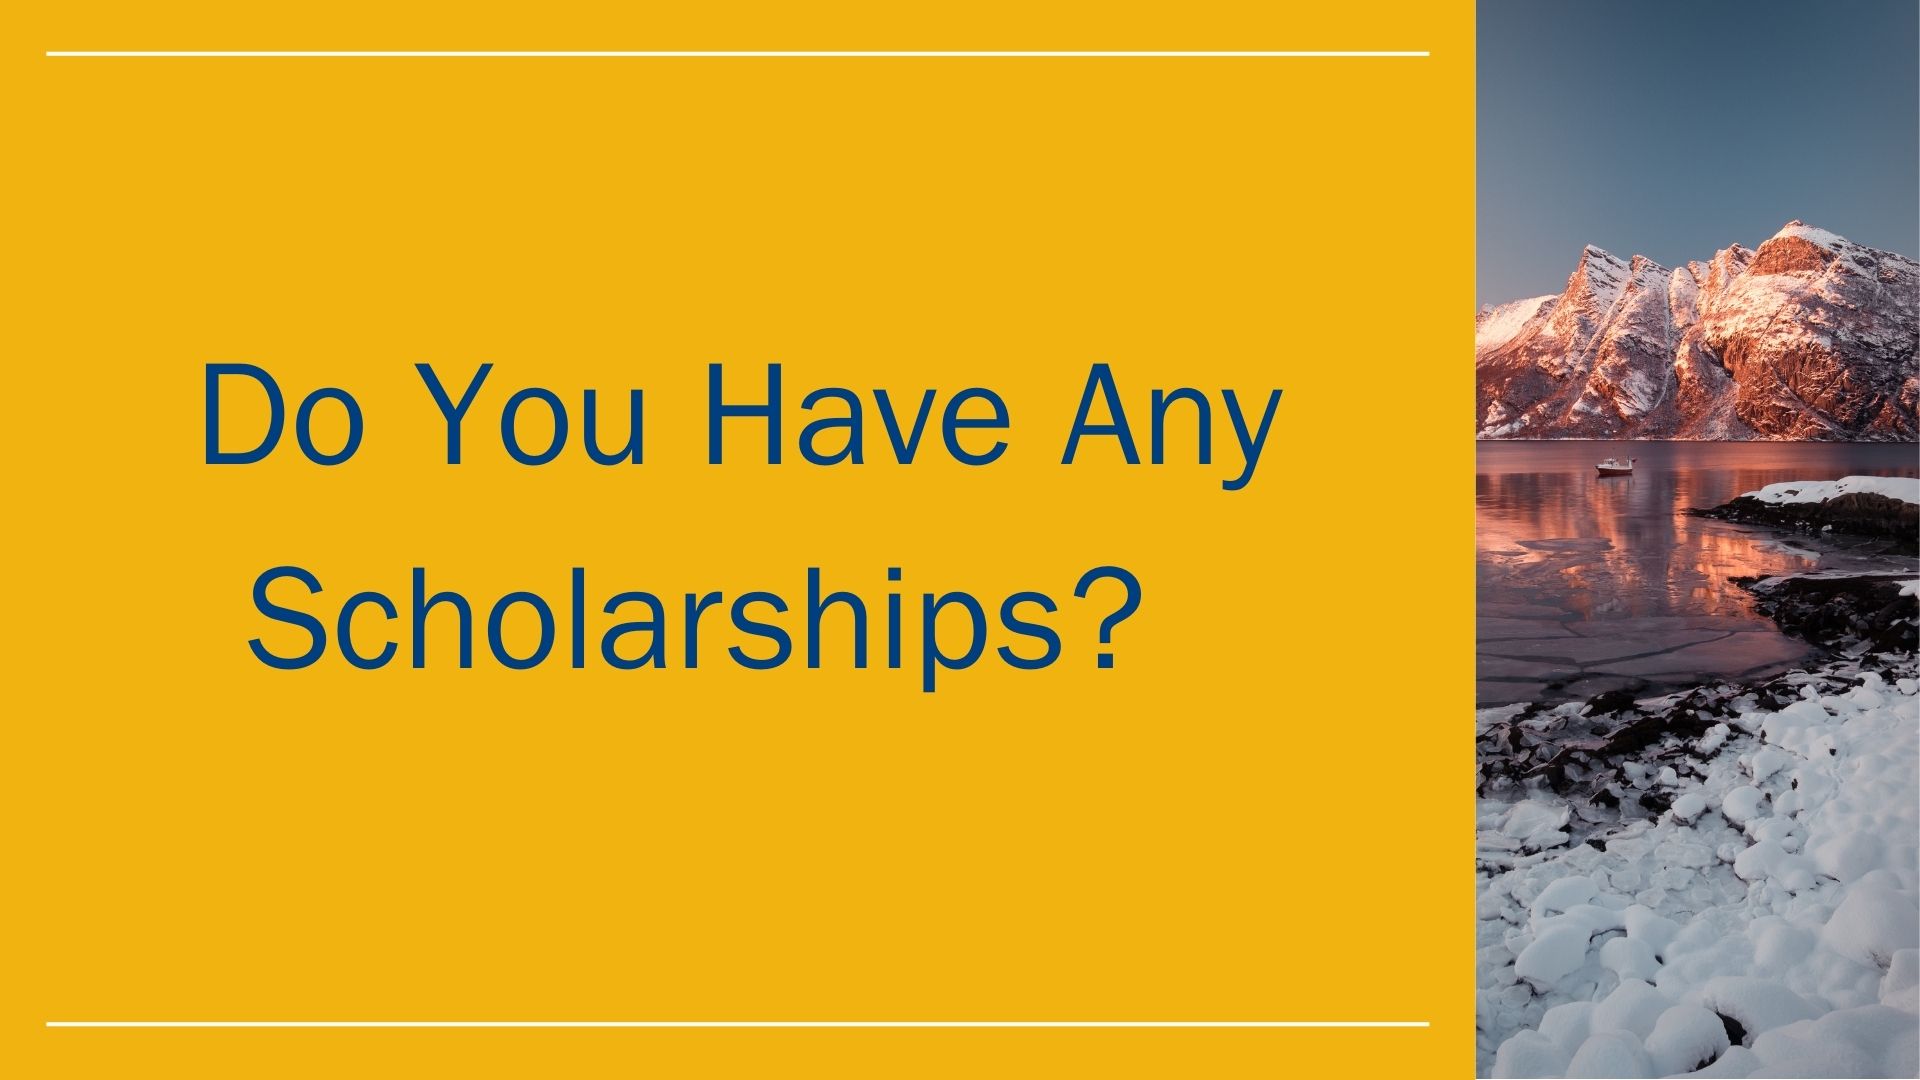 Scholarships?